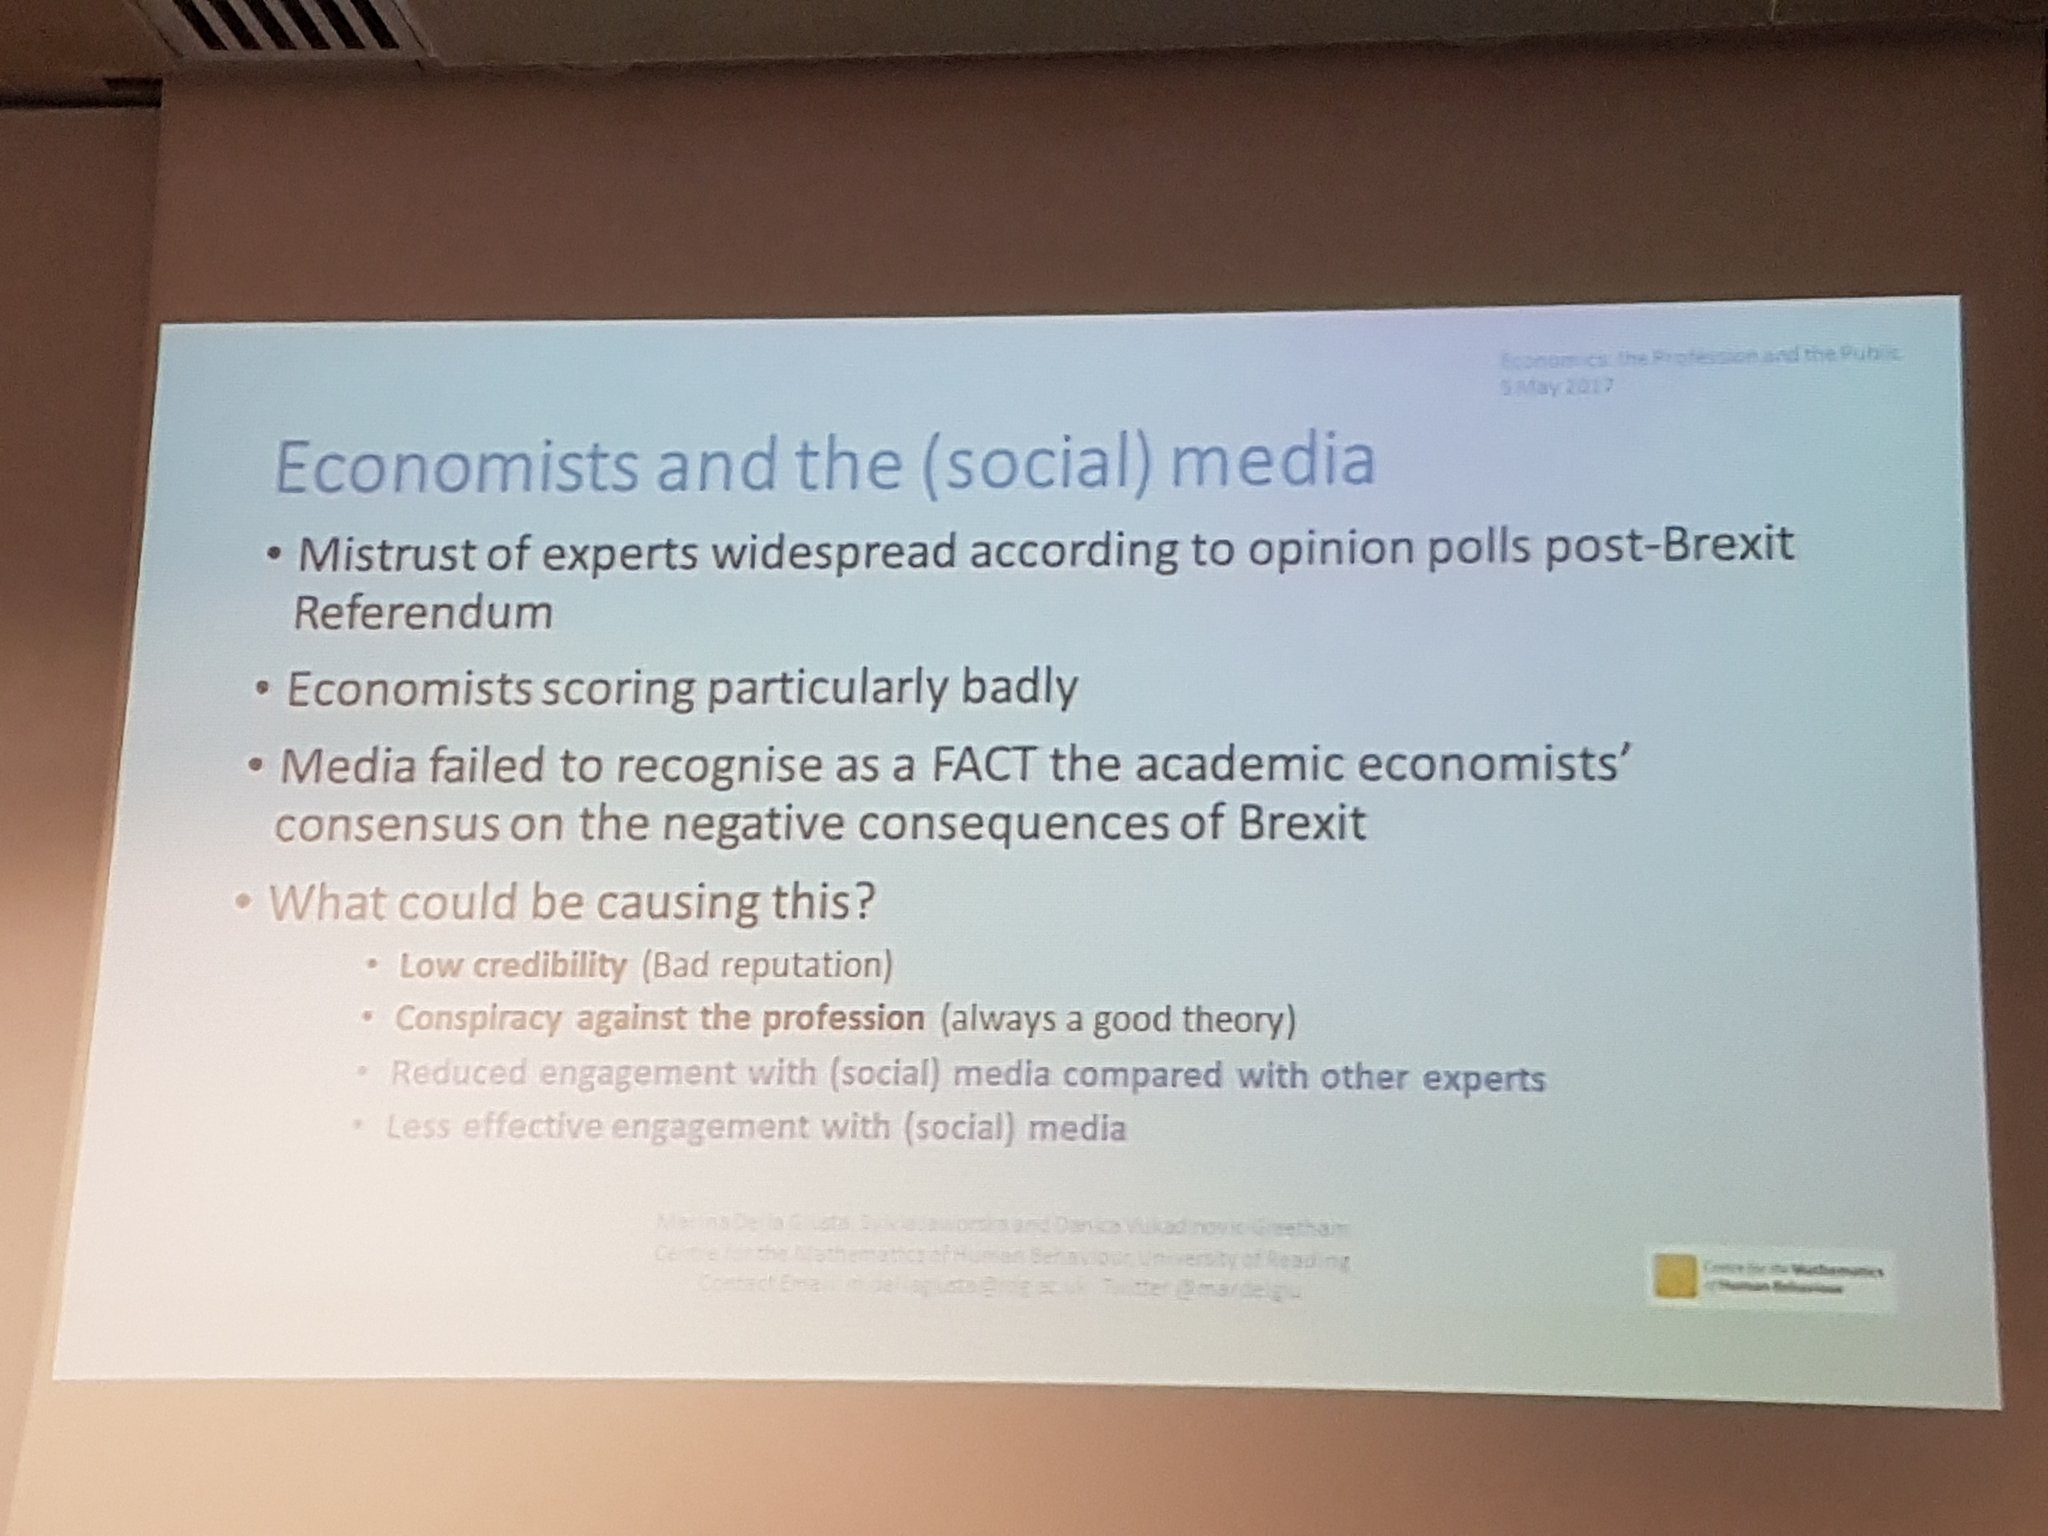 Economists score badly on social media #UnderstandingEcon Marina Della Giusta @economics_net @ING_Economics https://t.co/TJfXV4C77F